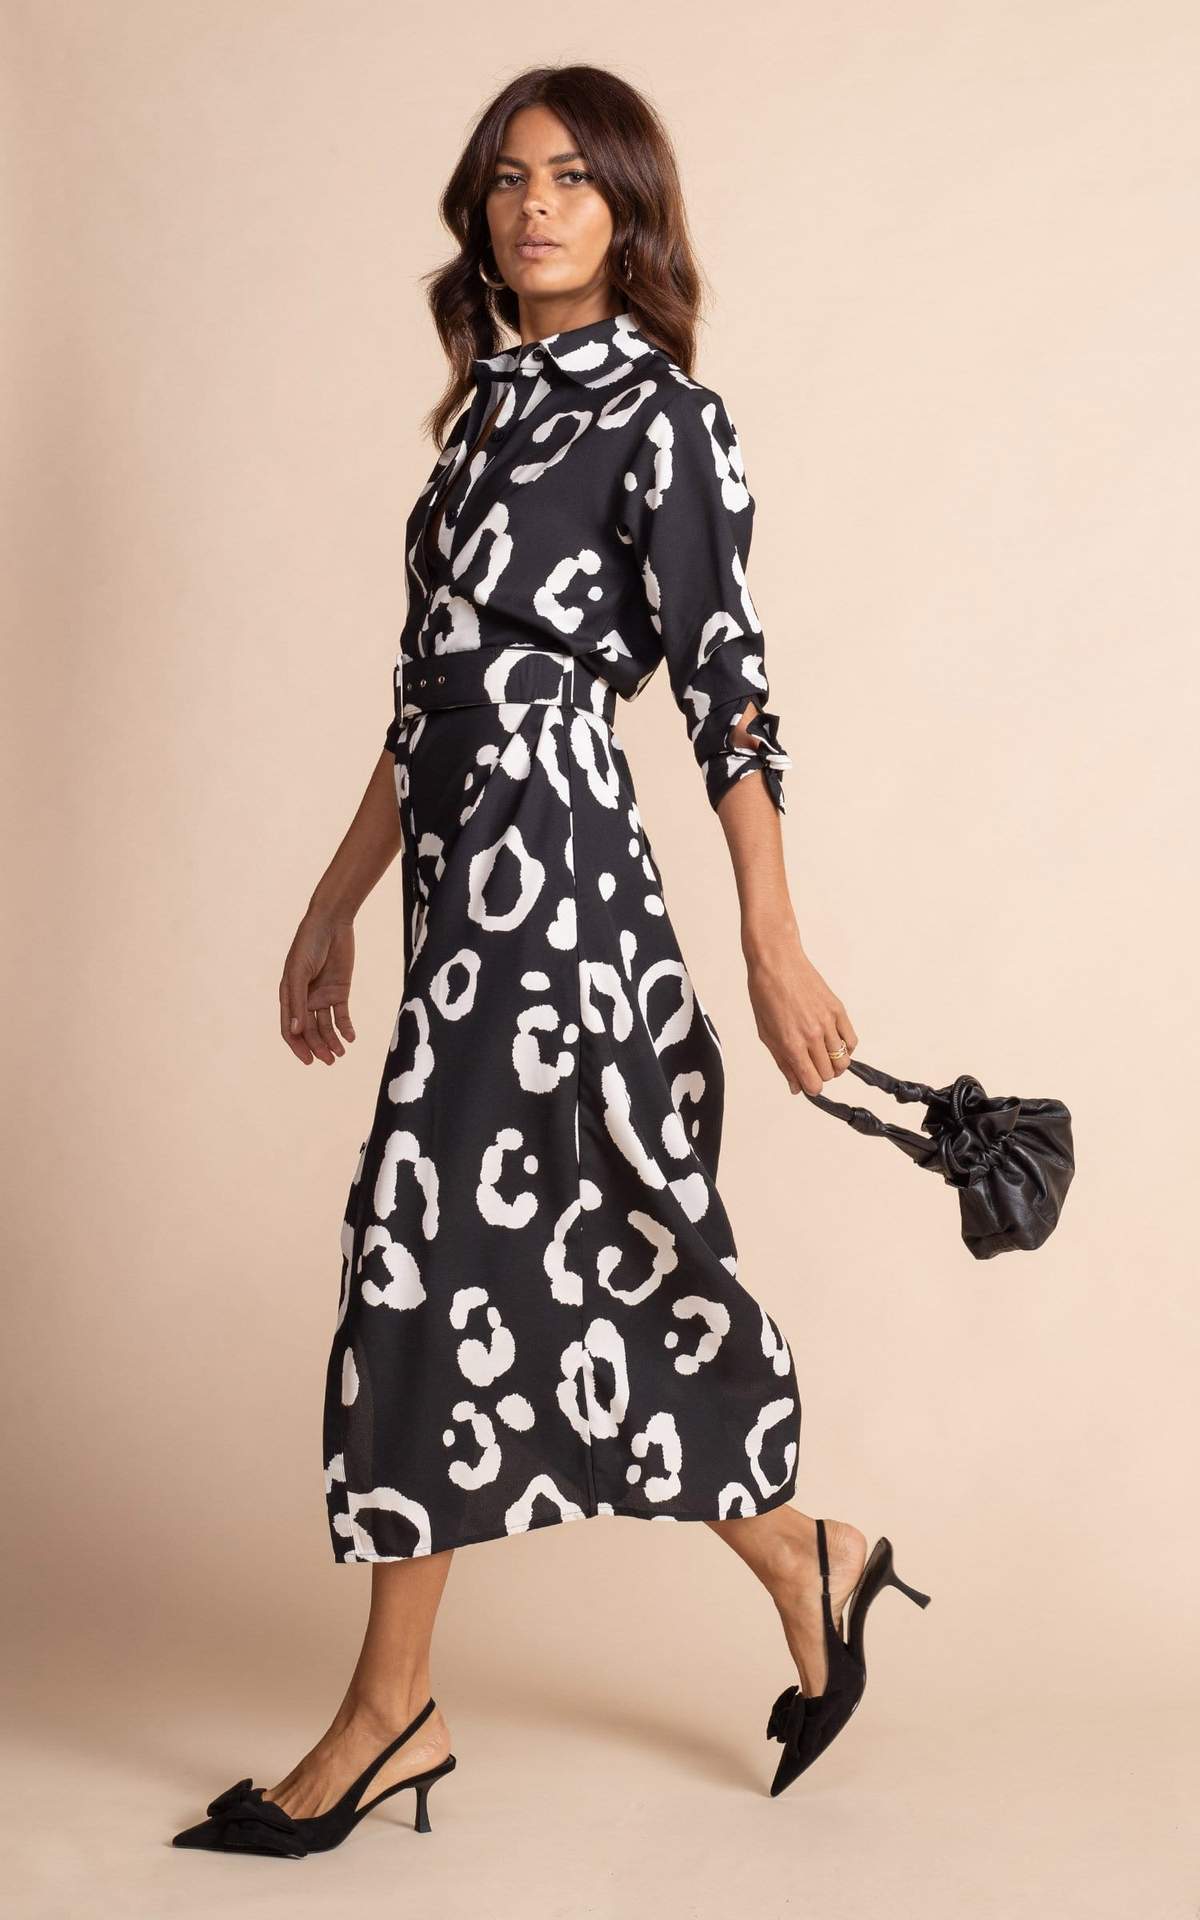 Dancing Leopard Monochrome Dress 